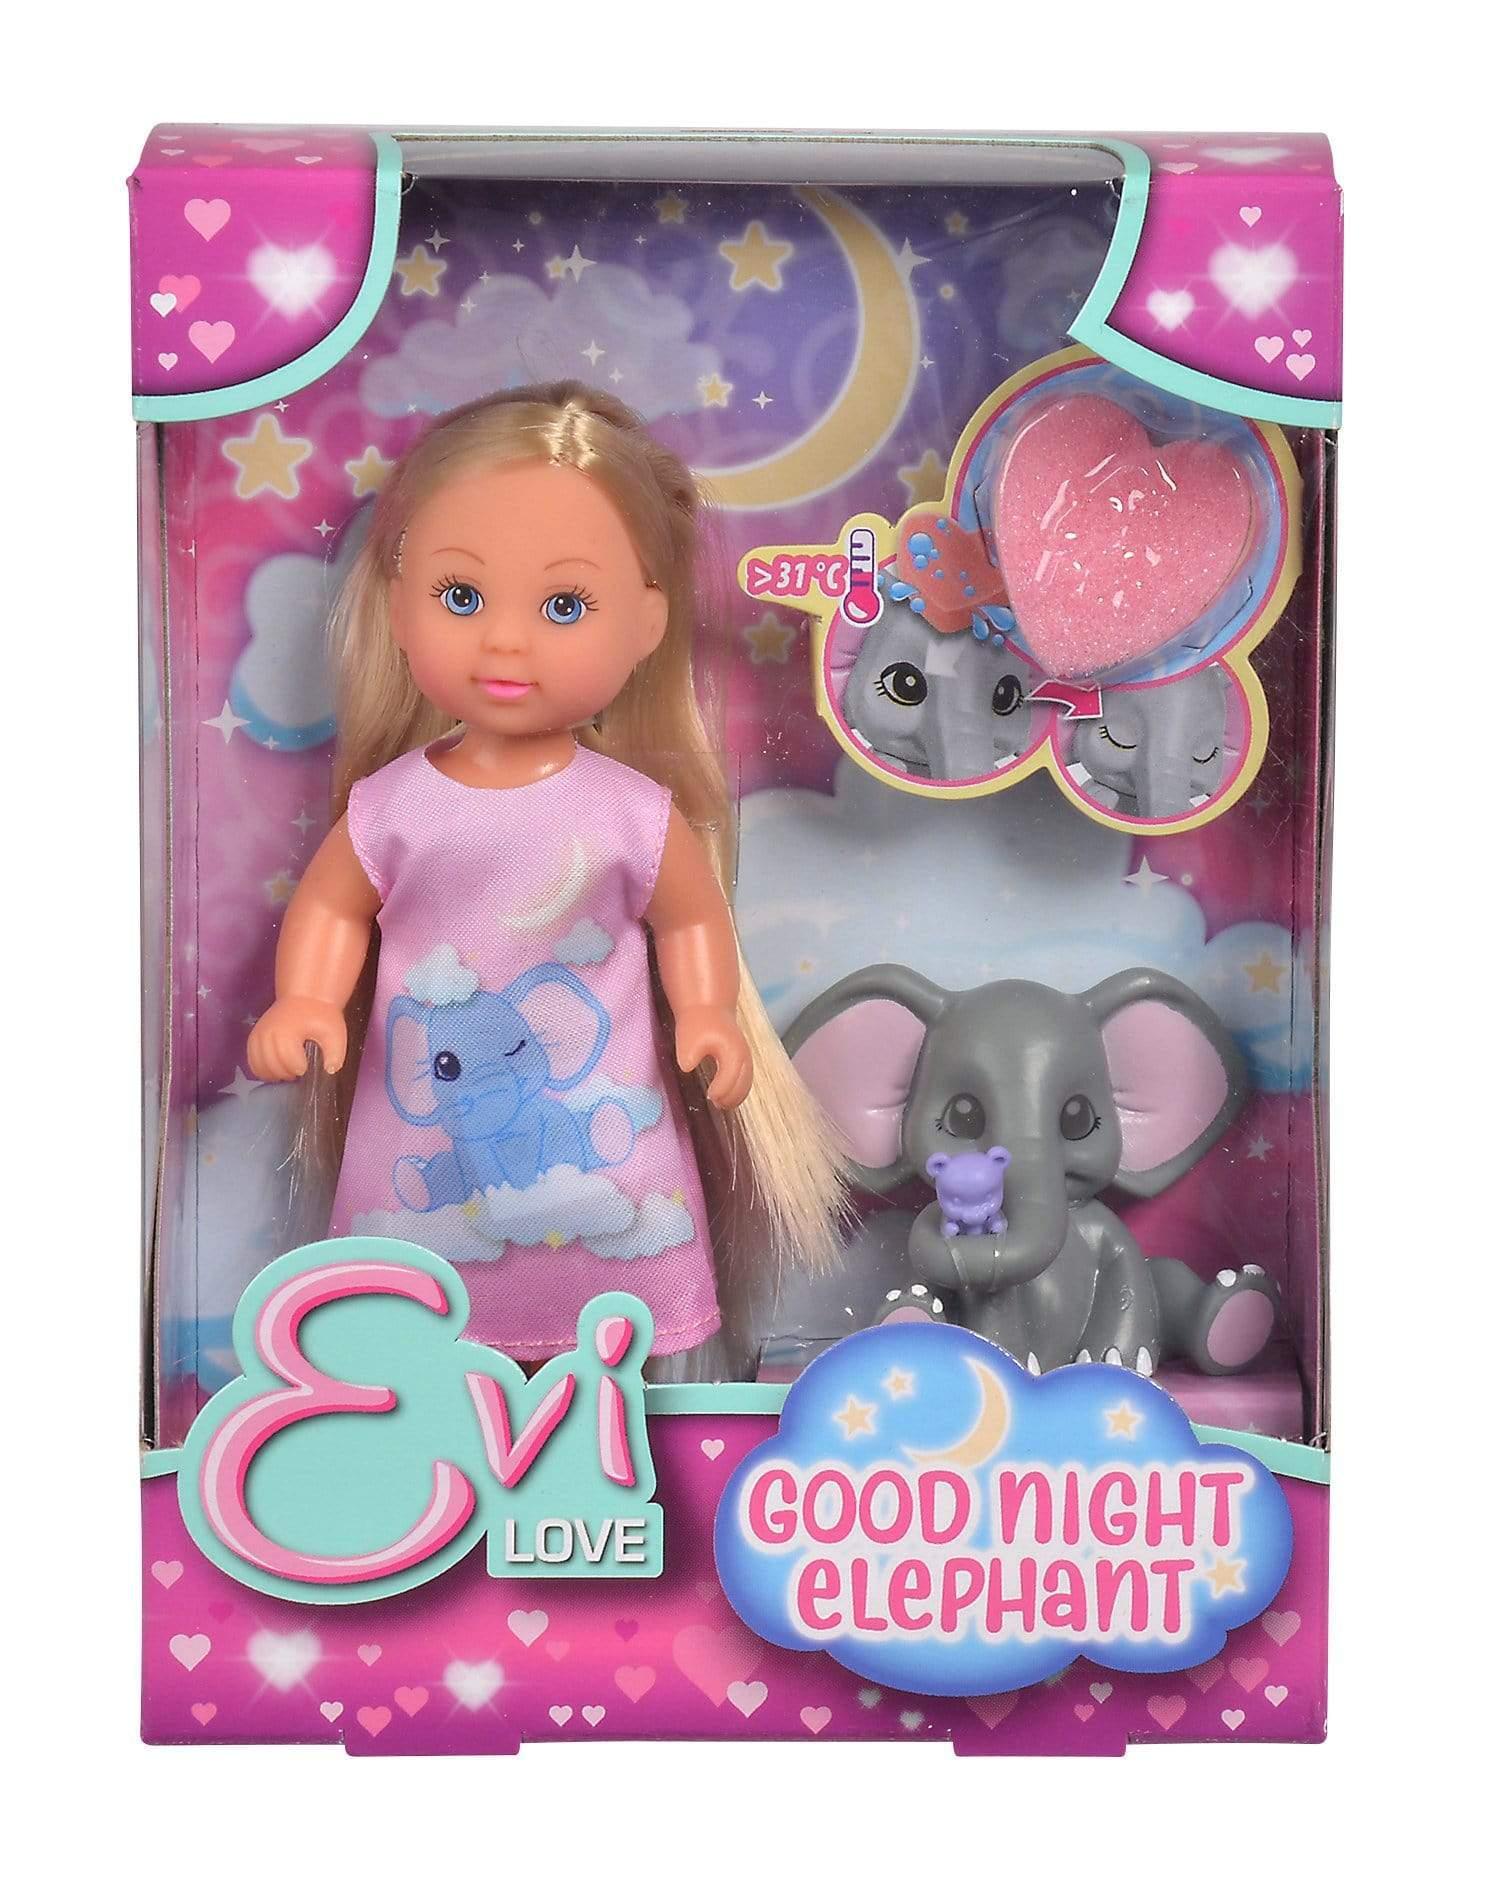 EVI LOVE el good night elephant